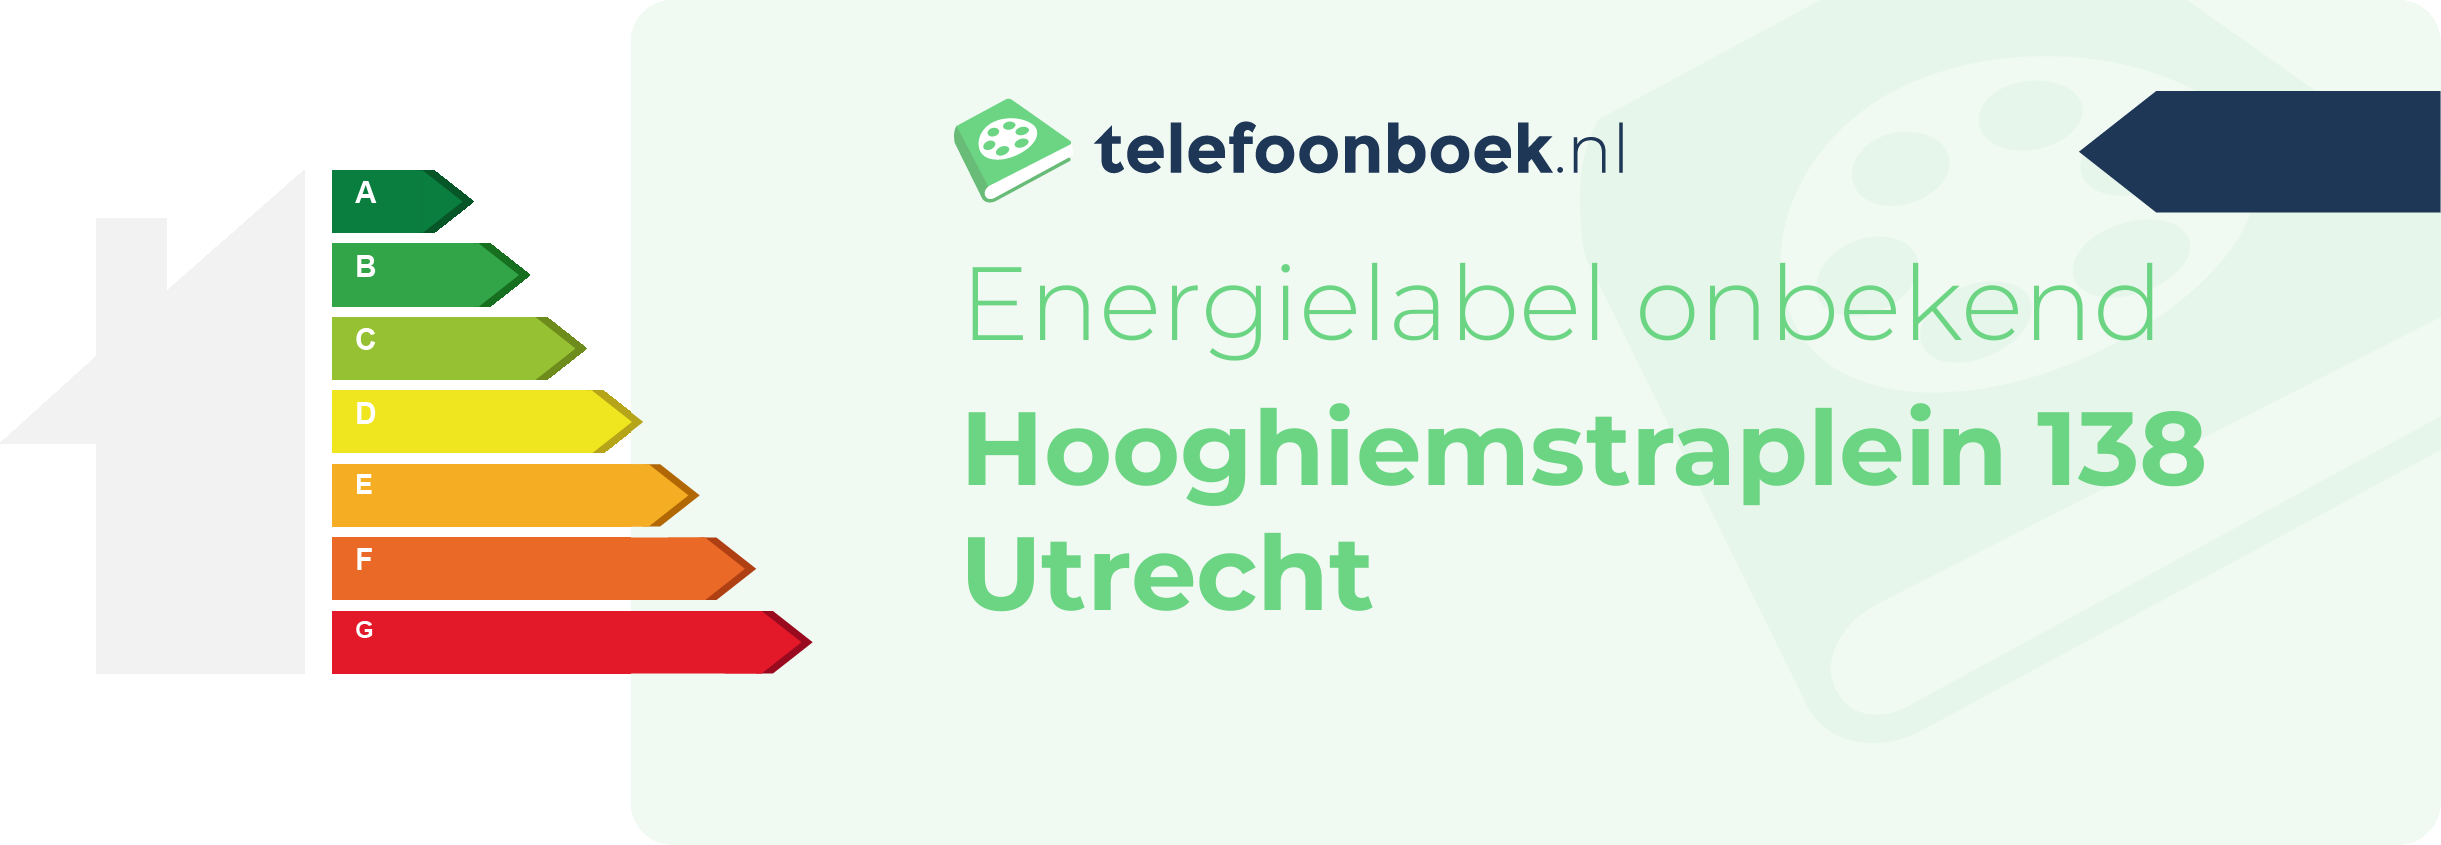 Energielabel Hooghiemstraplein 138 Utrecht